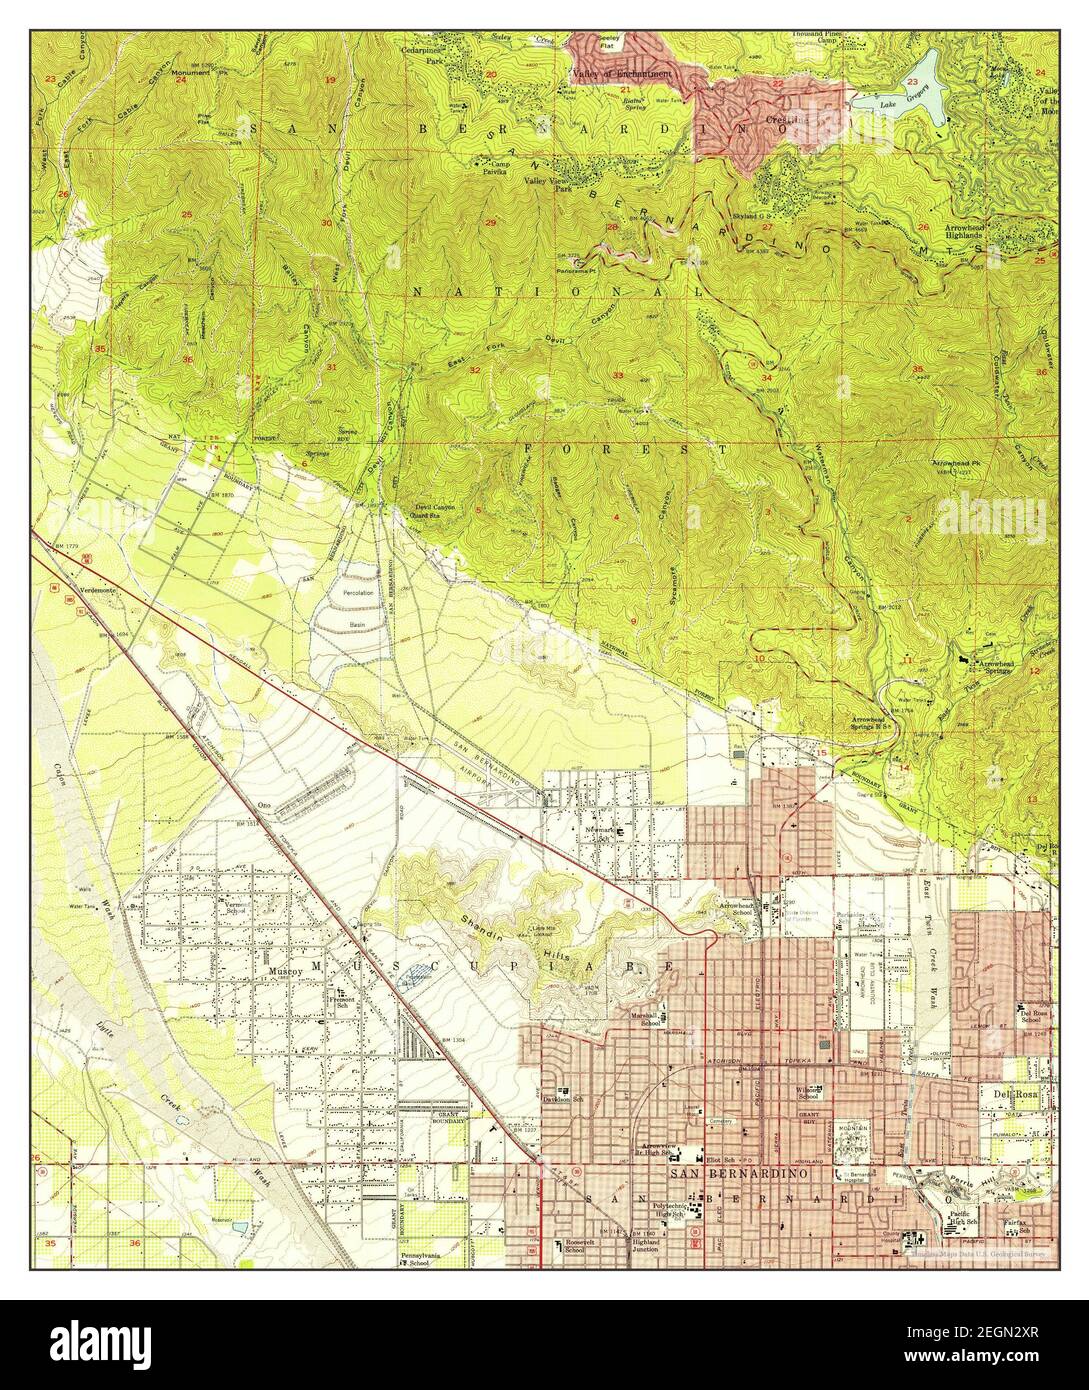 San Bernardino North, California, map 1954, 1:24000, United States of America by Timeless Maps, data U.S. Geological Survey Foto Stock